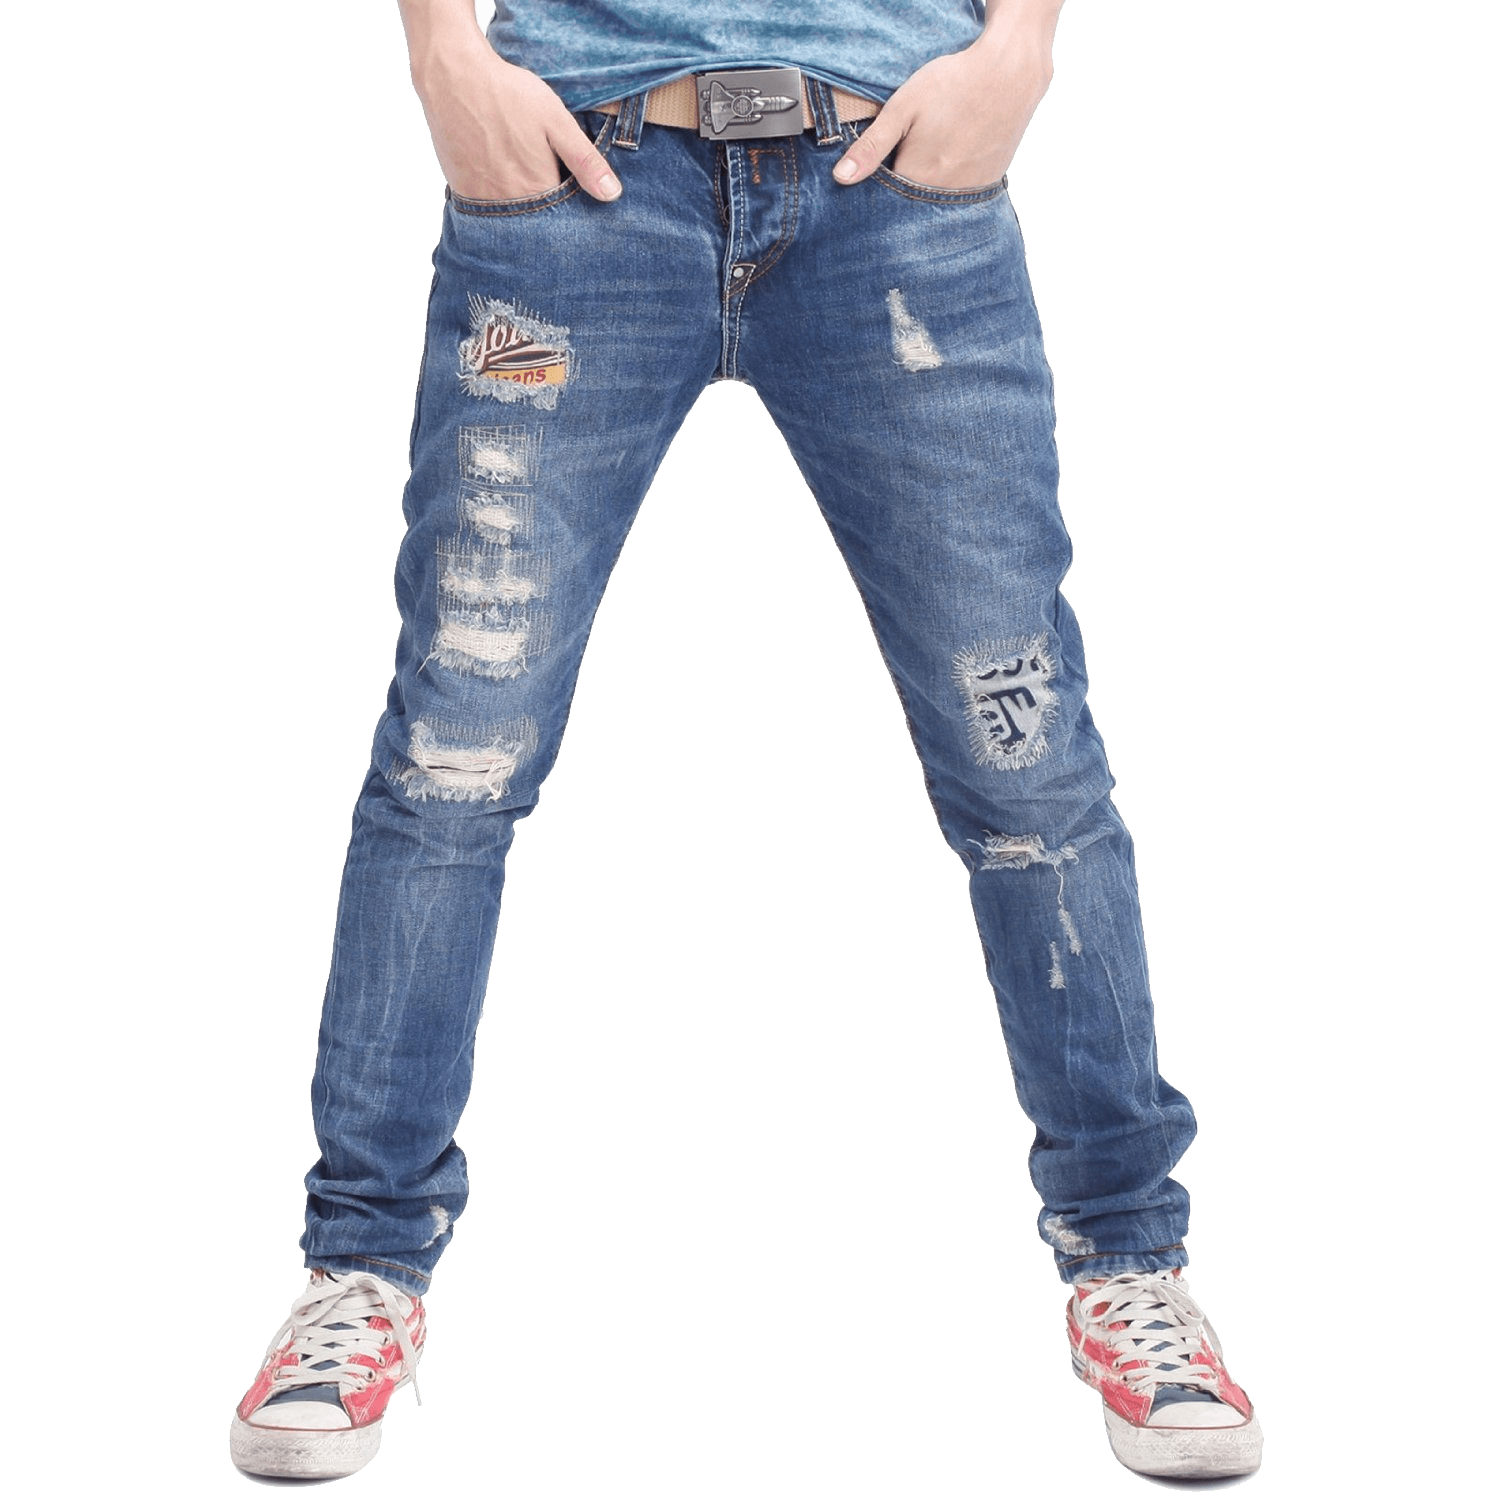 Denim Shorts Cowboys Jeans Khakis PNG